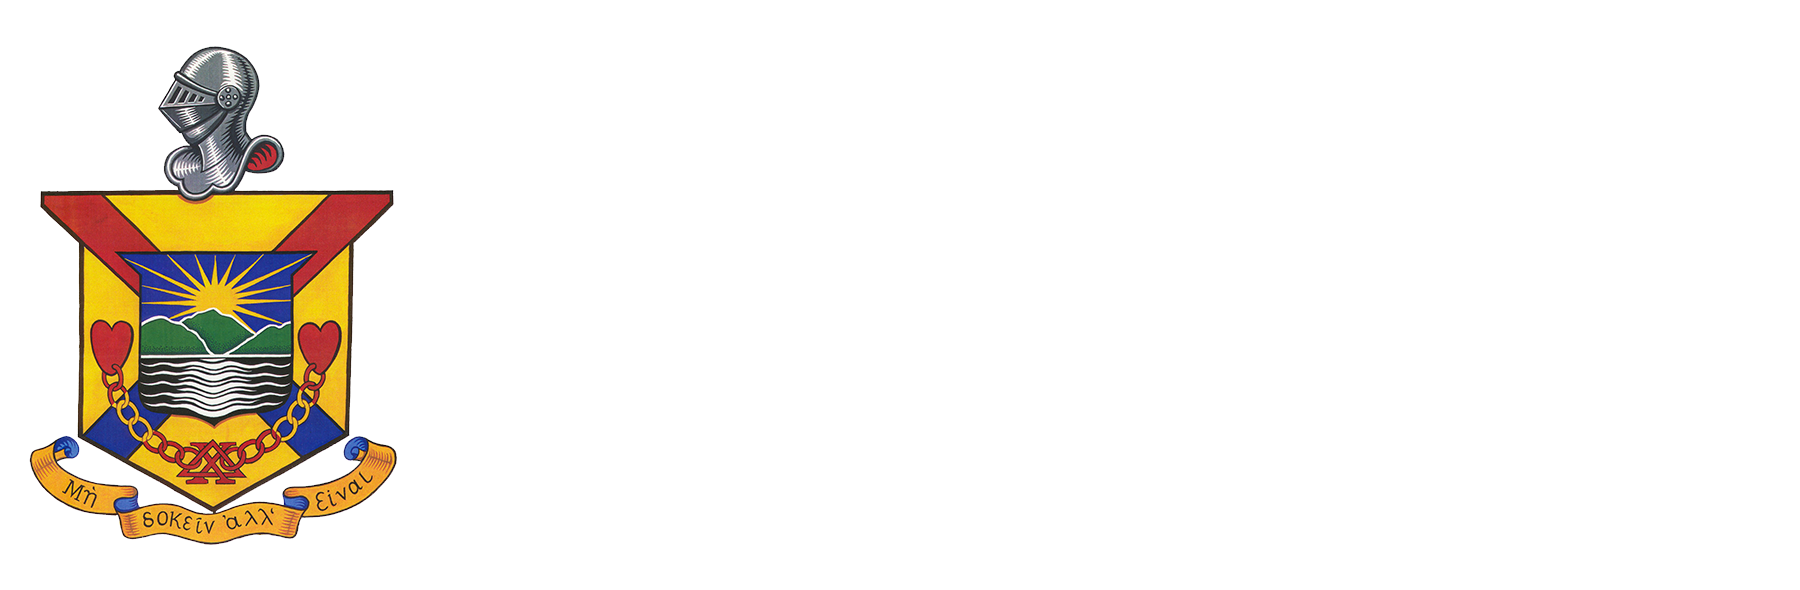 Delta Chi Chapter of Delta Kappa Epsilon